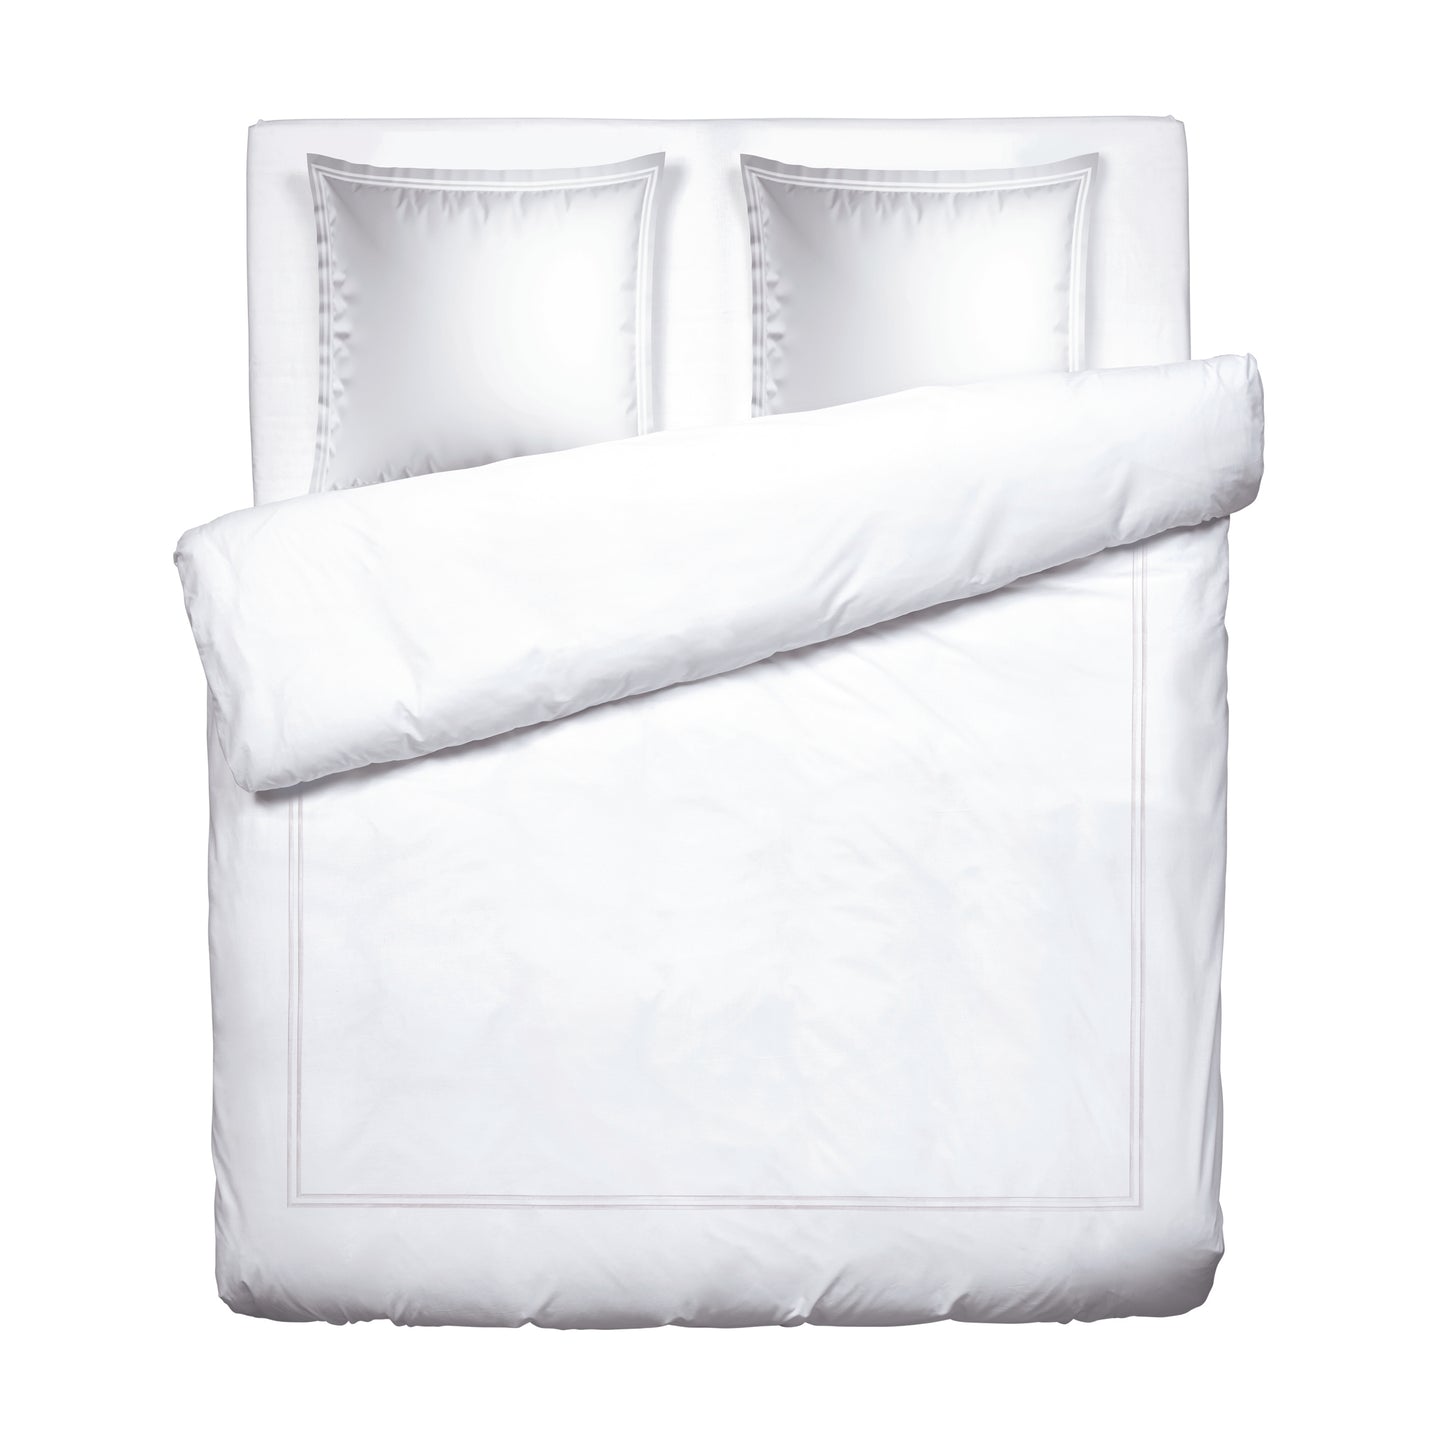 Duvet cover + pillowcase(s) cotton satin - Nice White